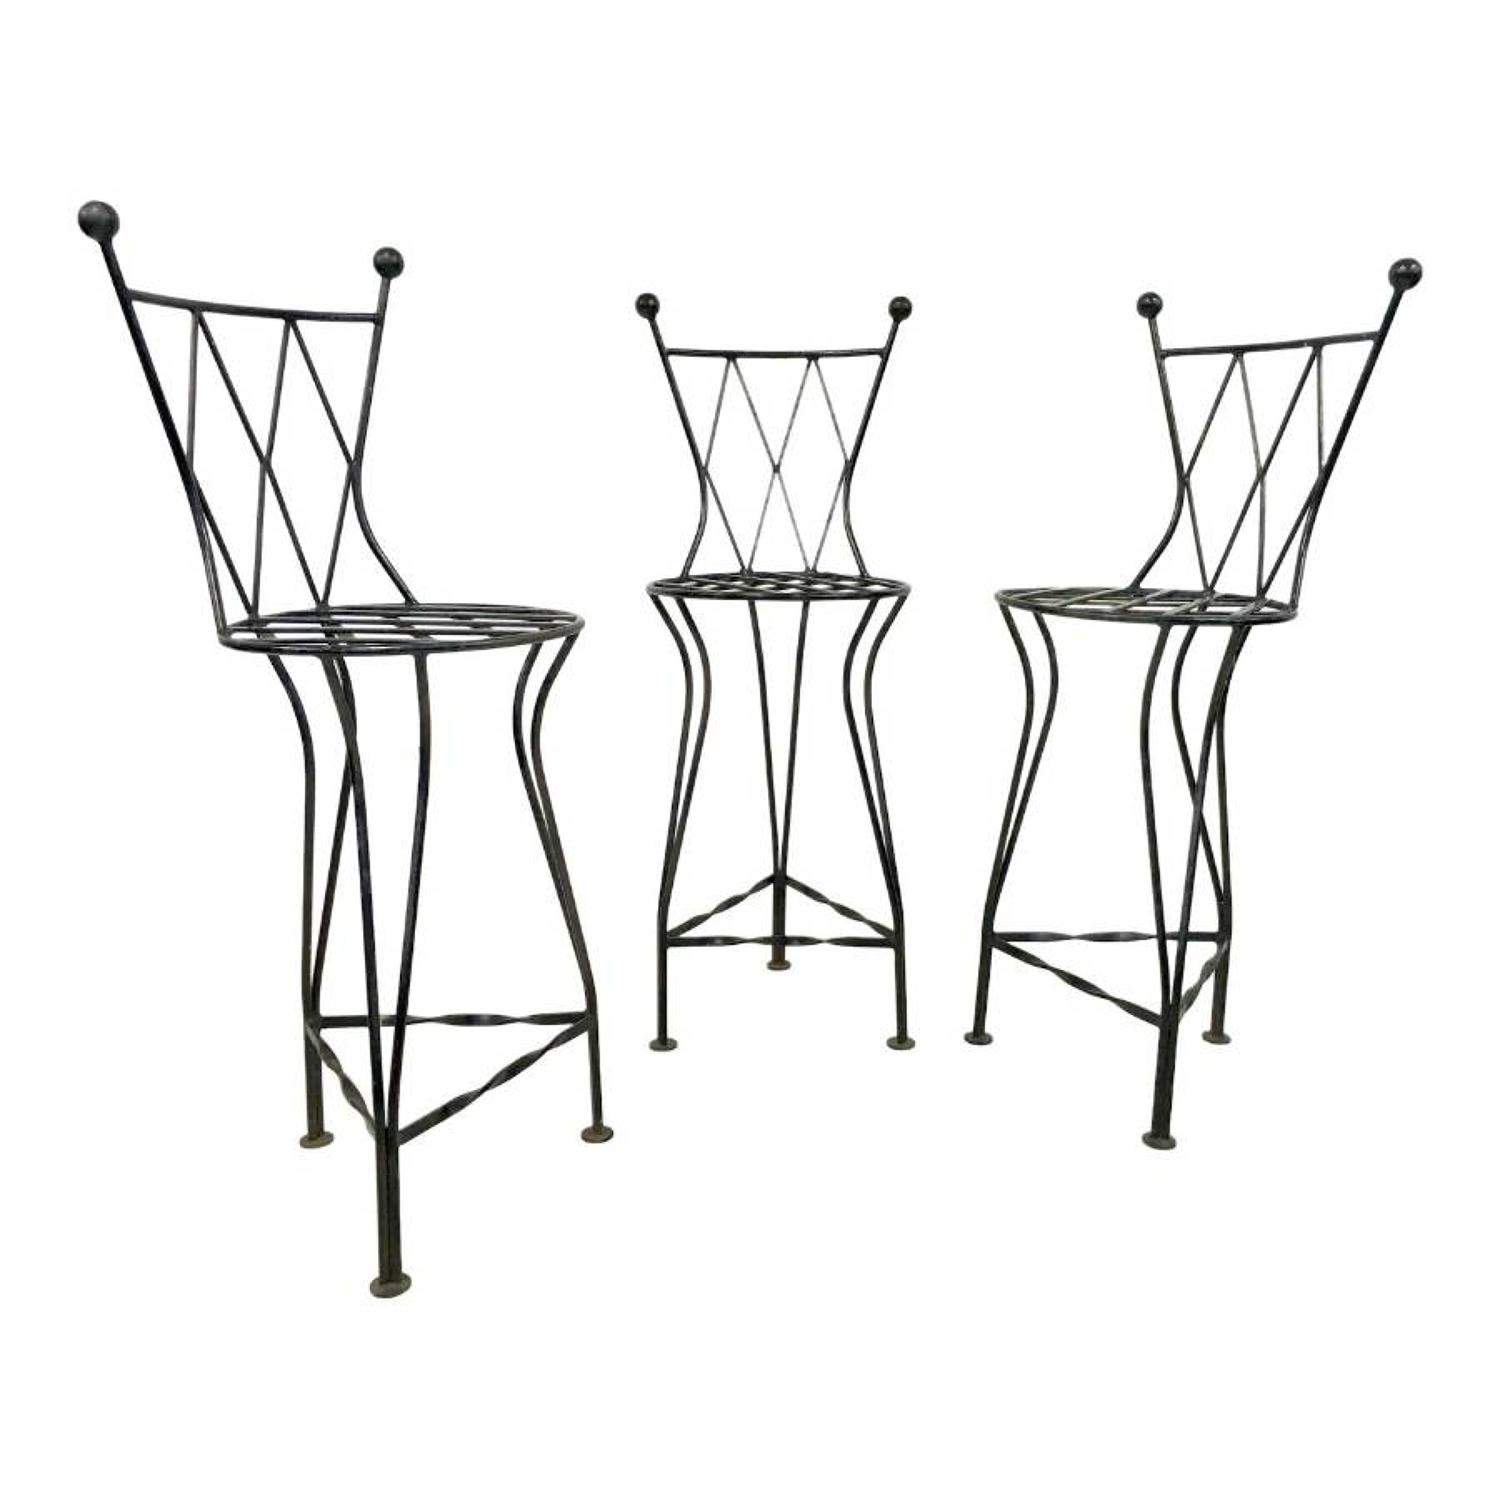 A set of three iron bar stools